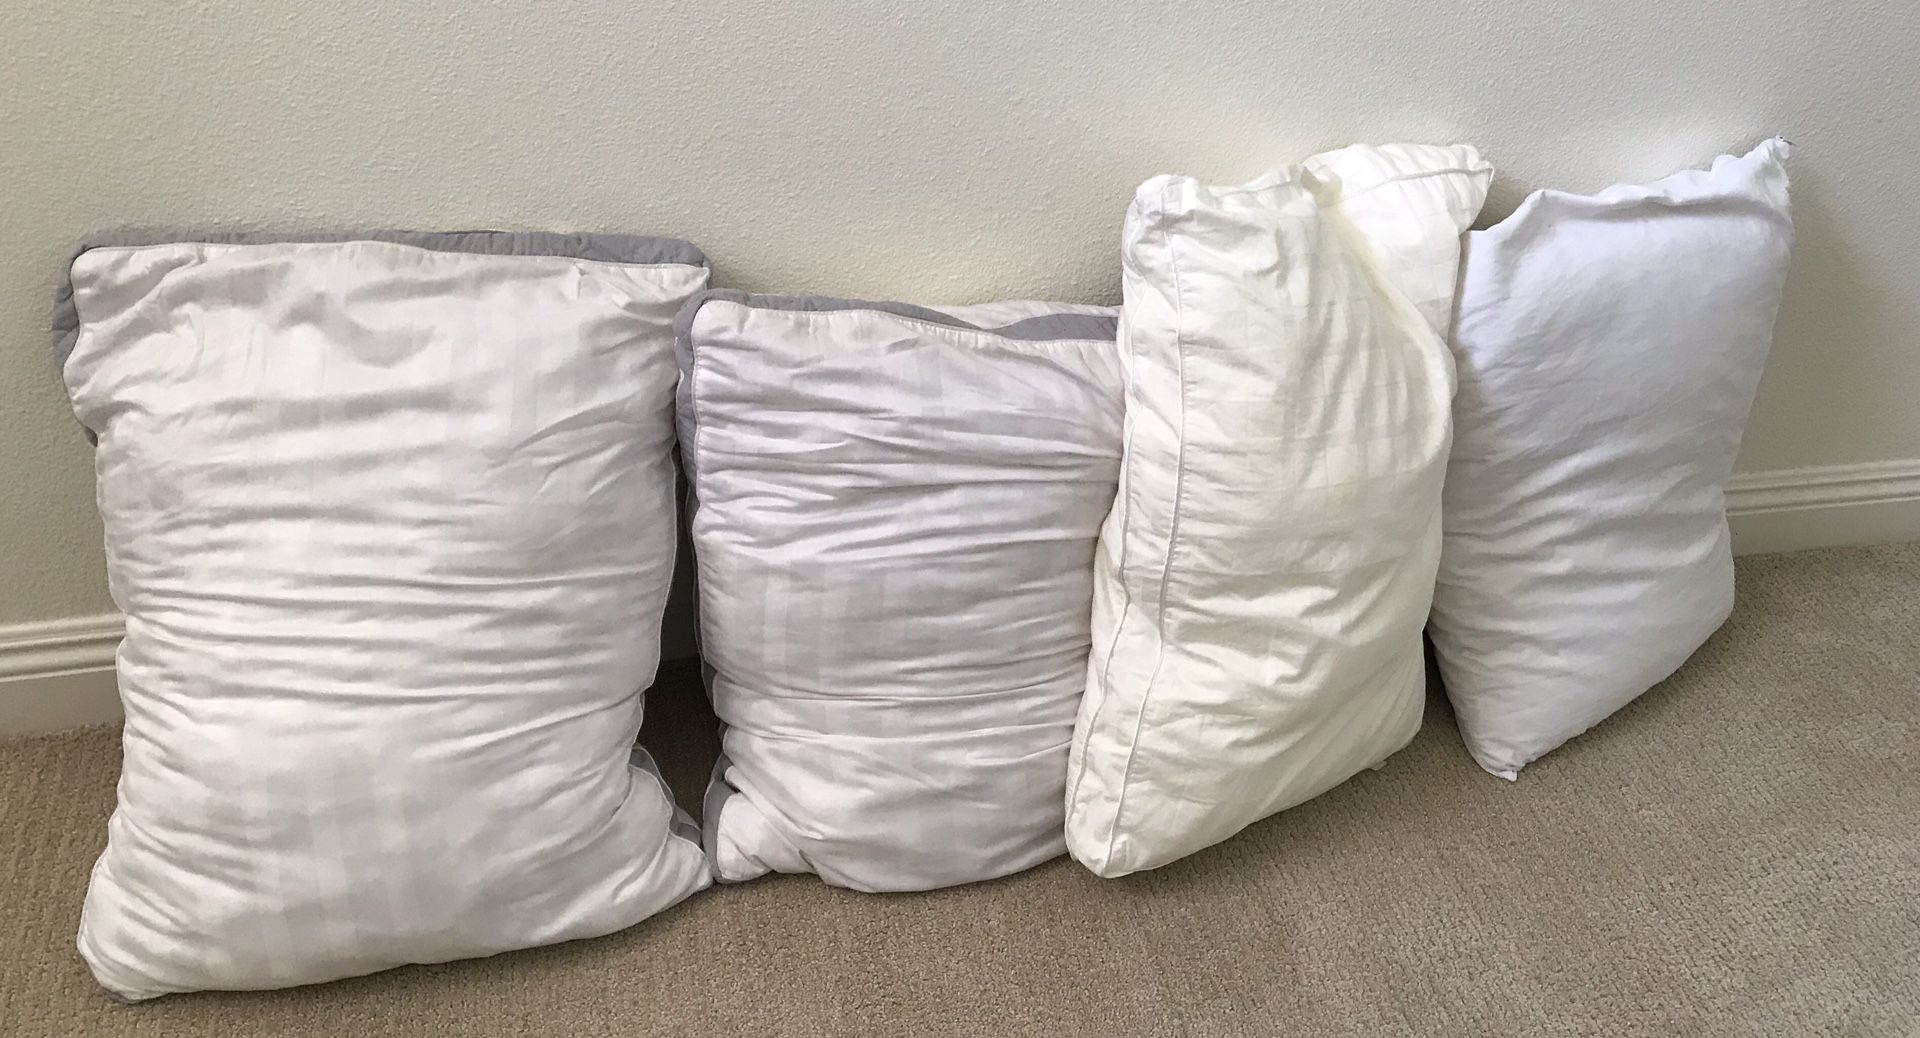 FREE Four Standard Size Pillows